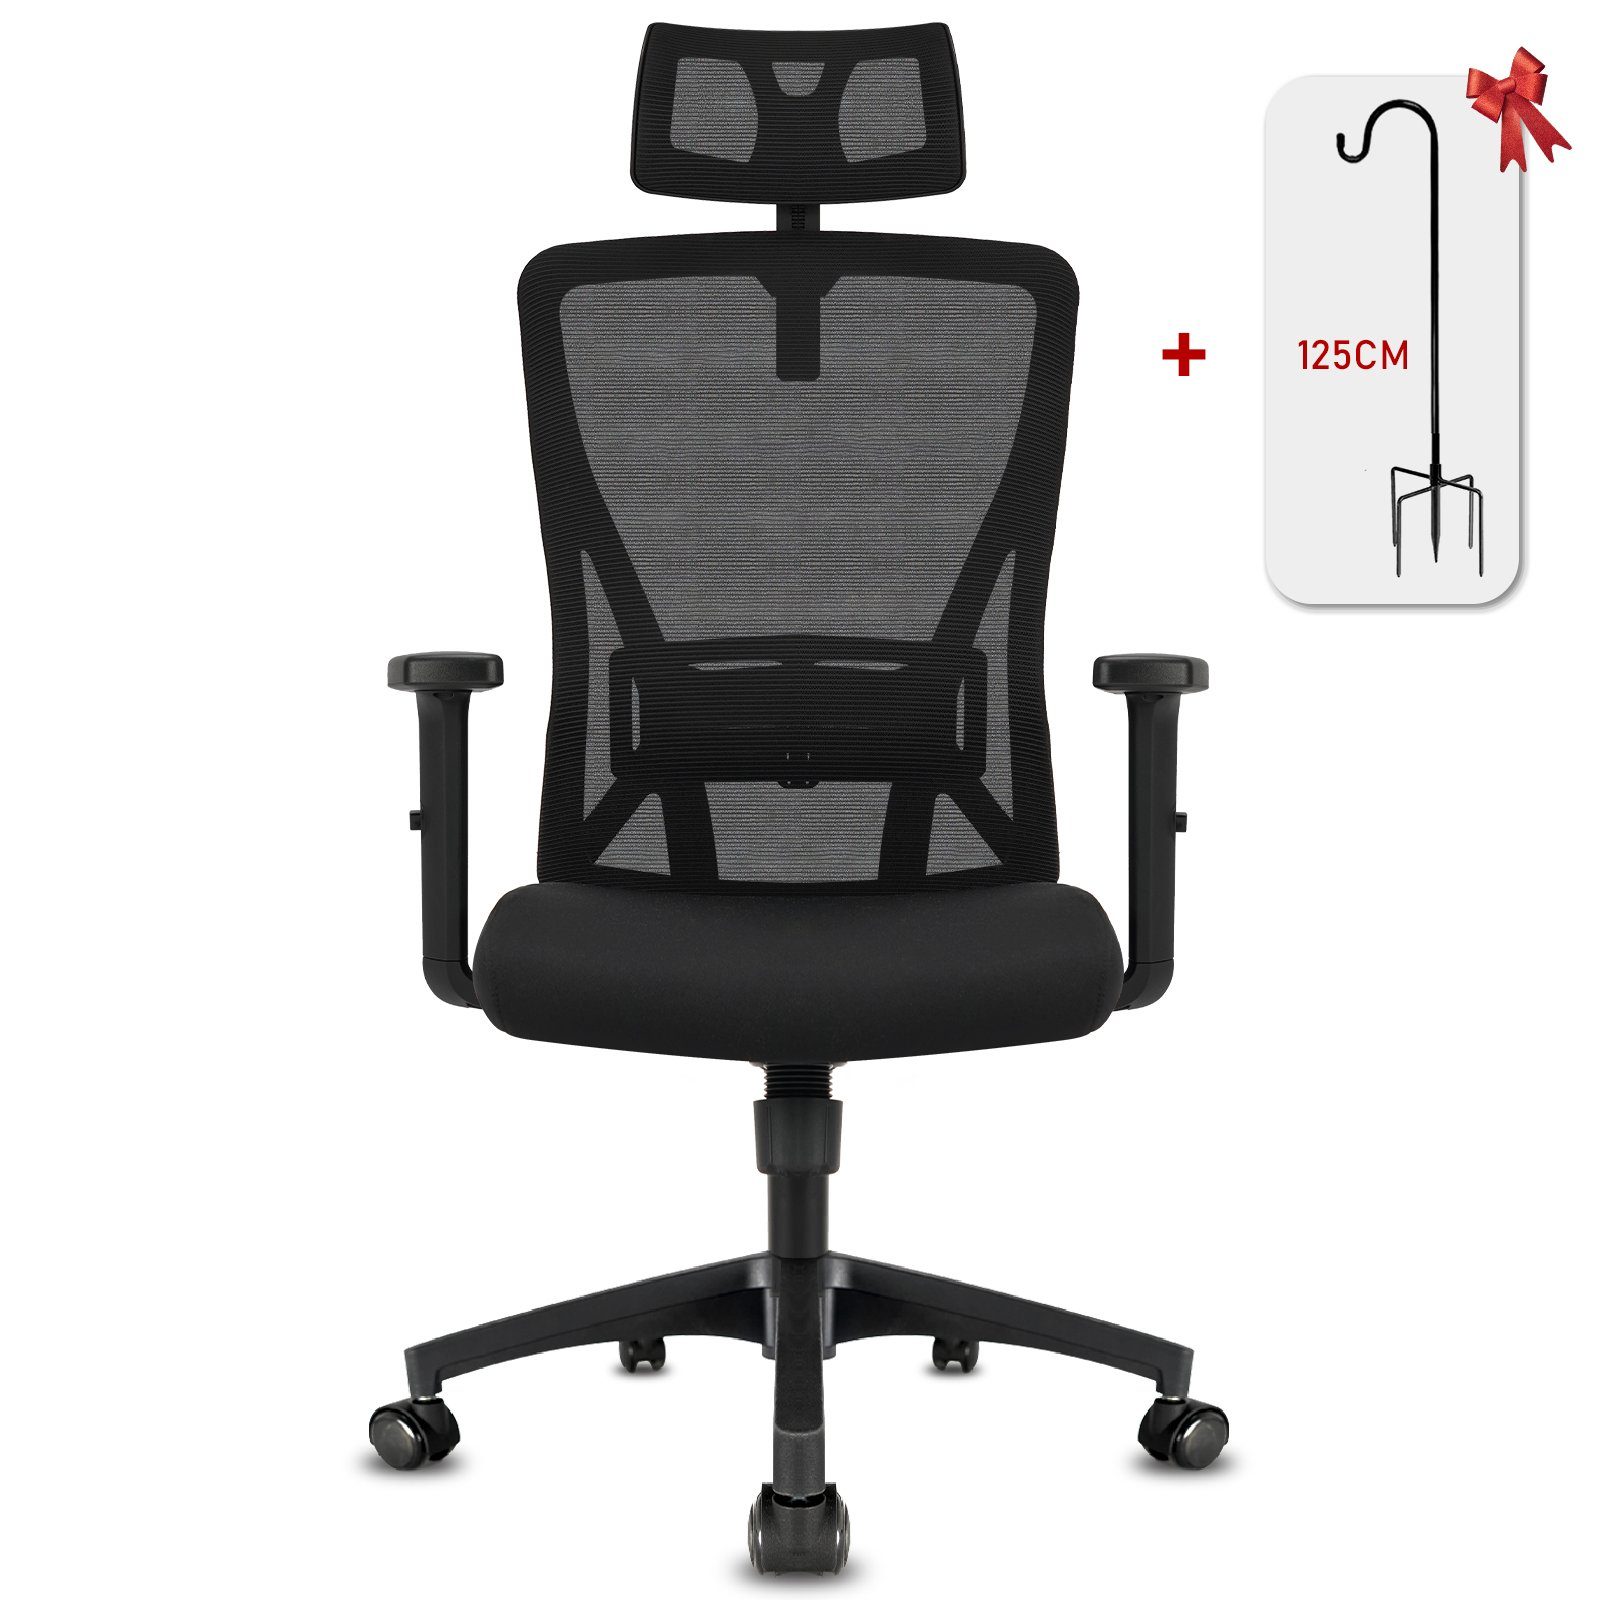 Chefsessel Schwarz-C 150KG ergonomischer Bürostuhl, Computerstuhl belastbar, Durrafy Chefsessel,Drehstuhl, 90°-130° Kippfunktion, Bürostuhl